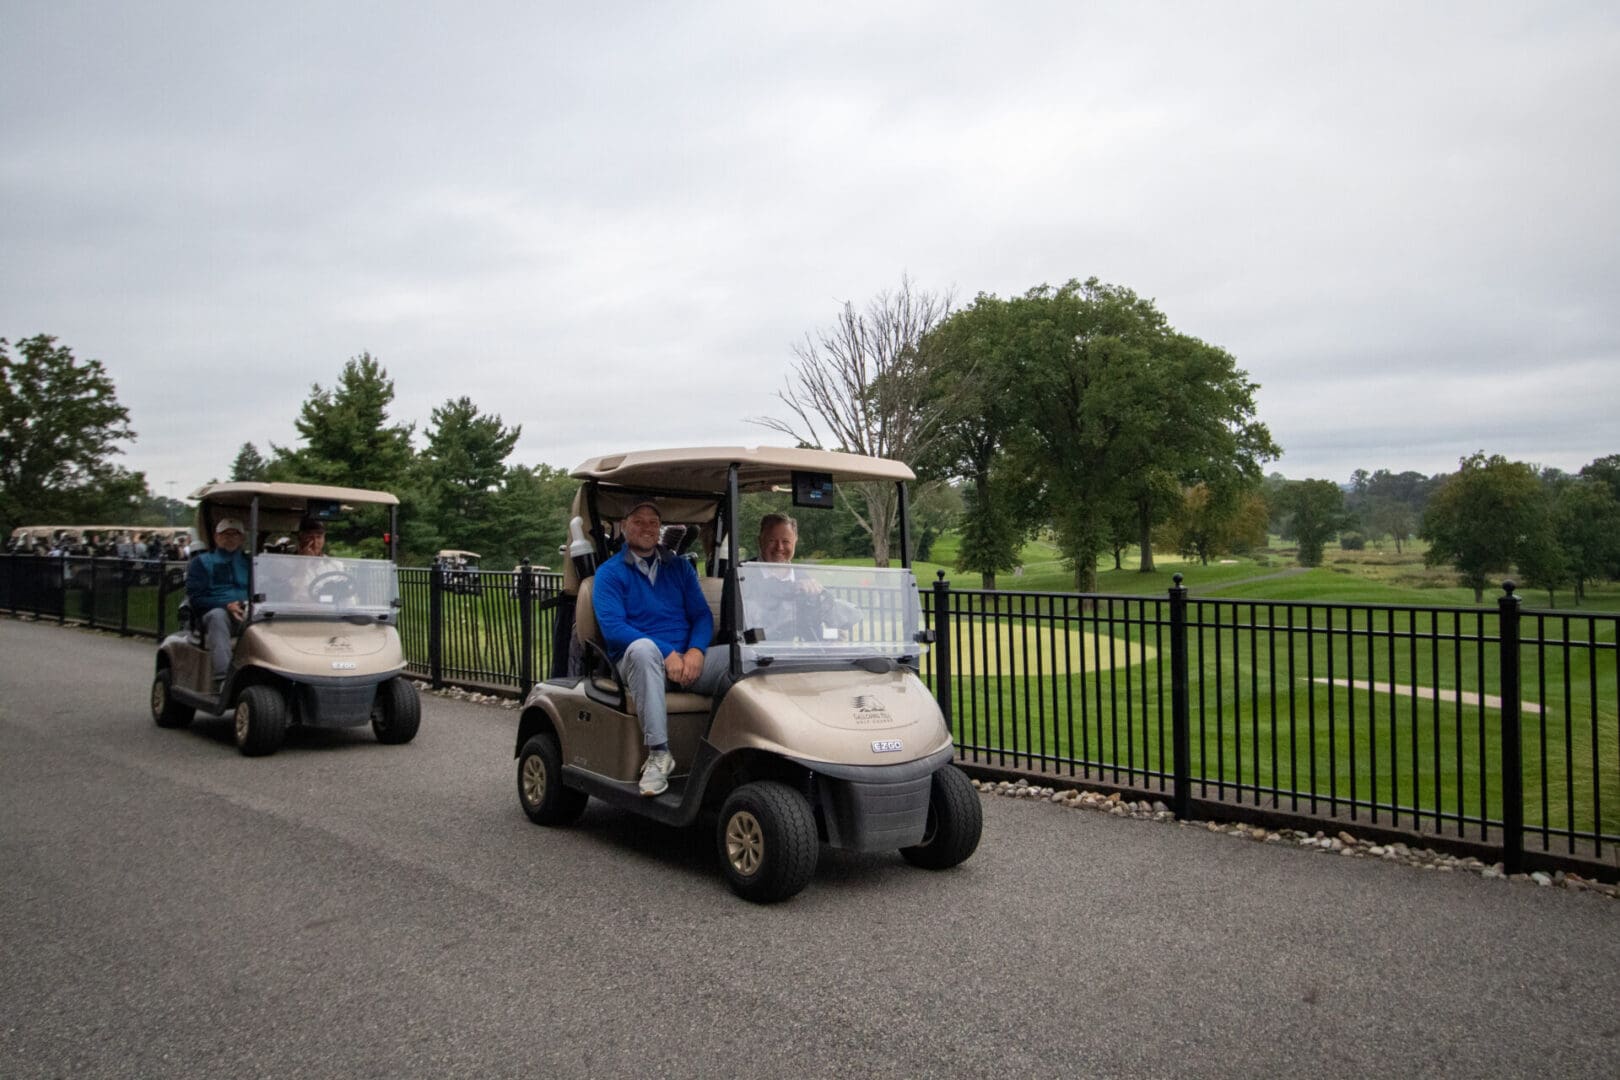 2 golf carts